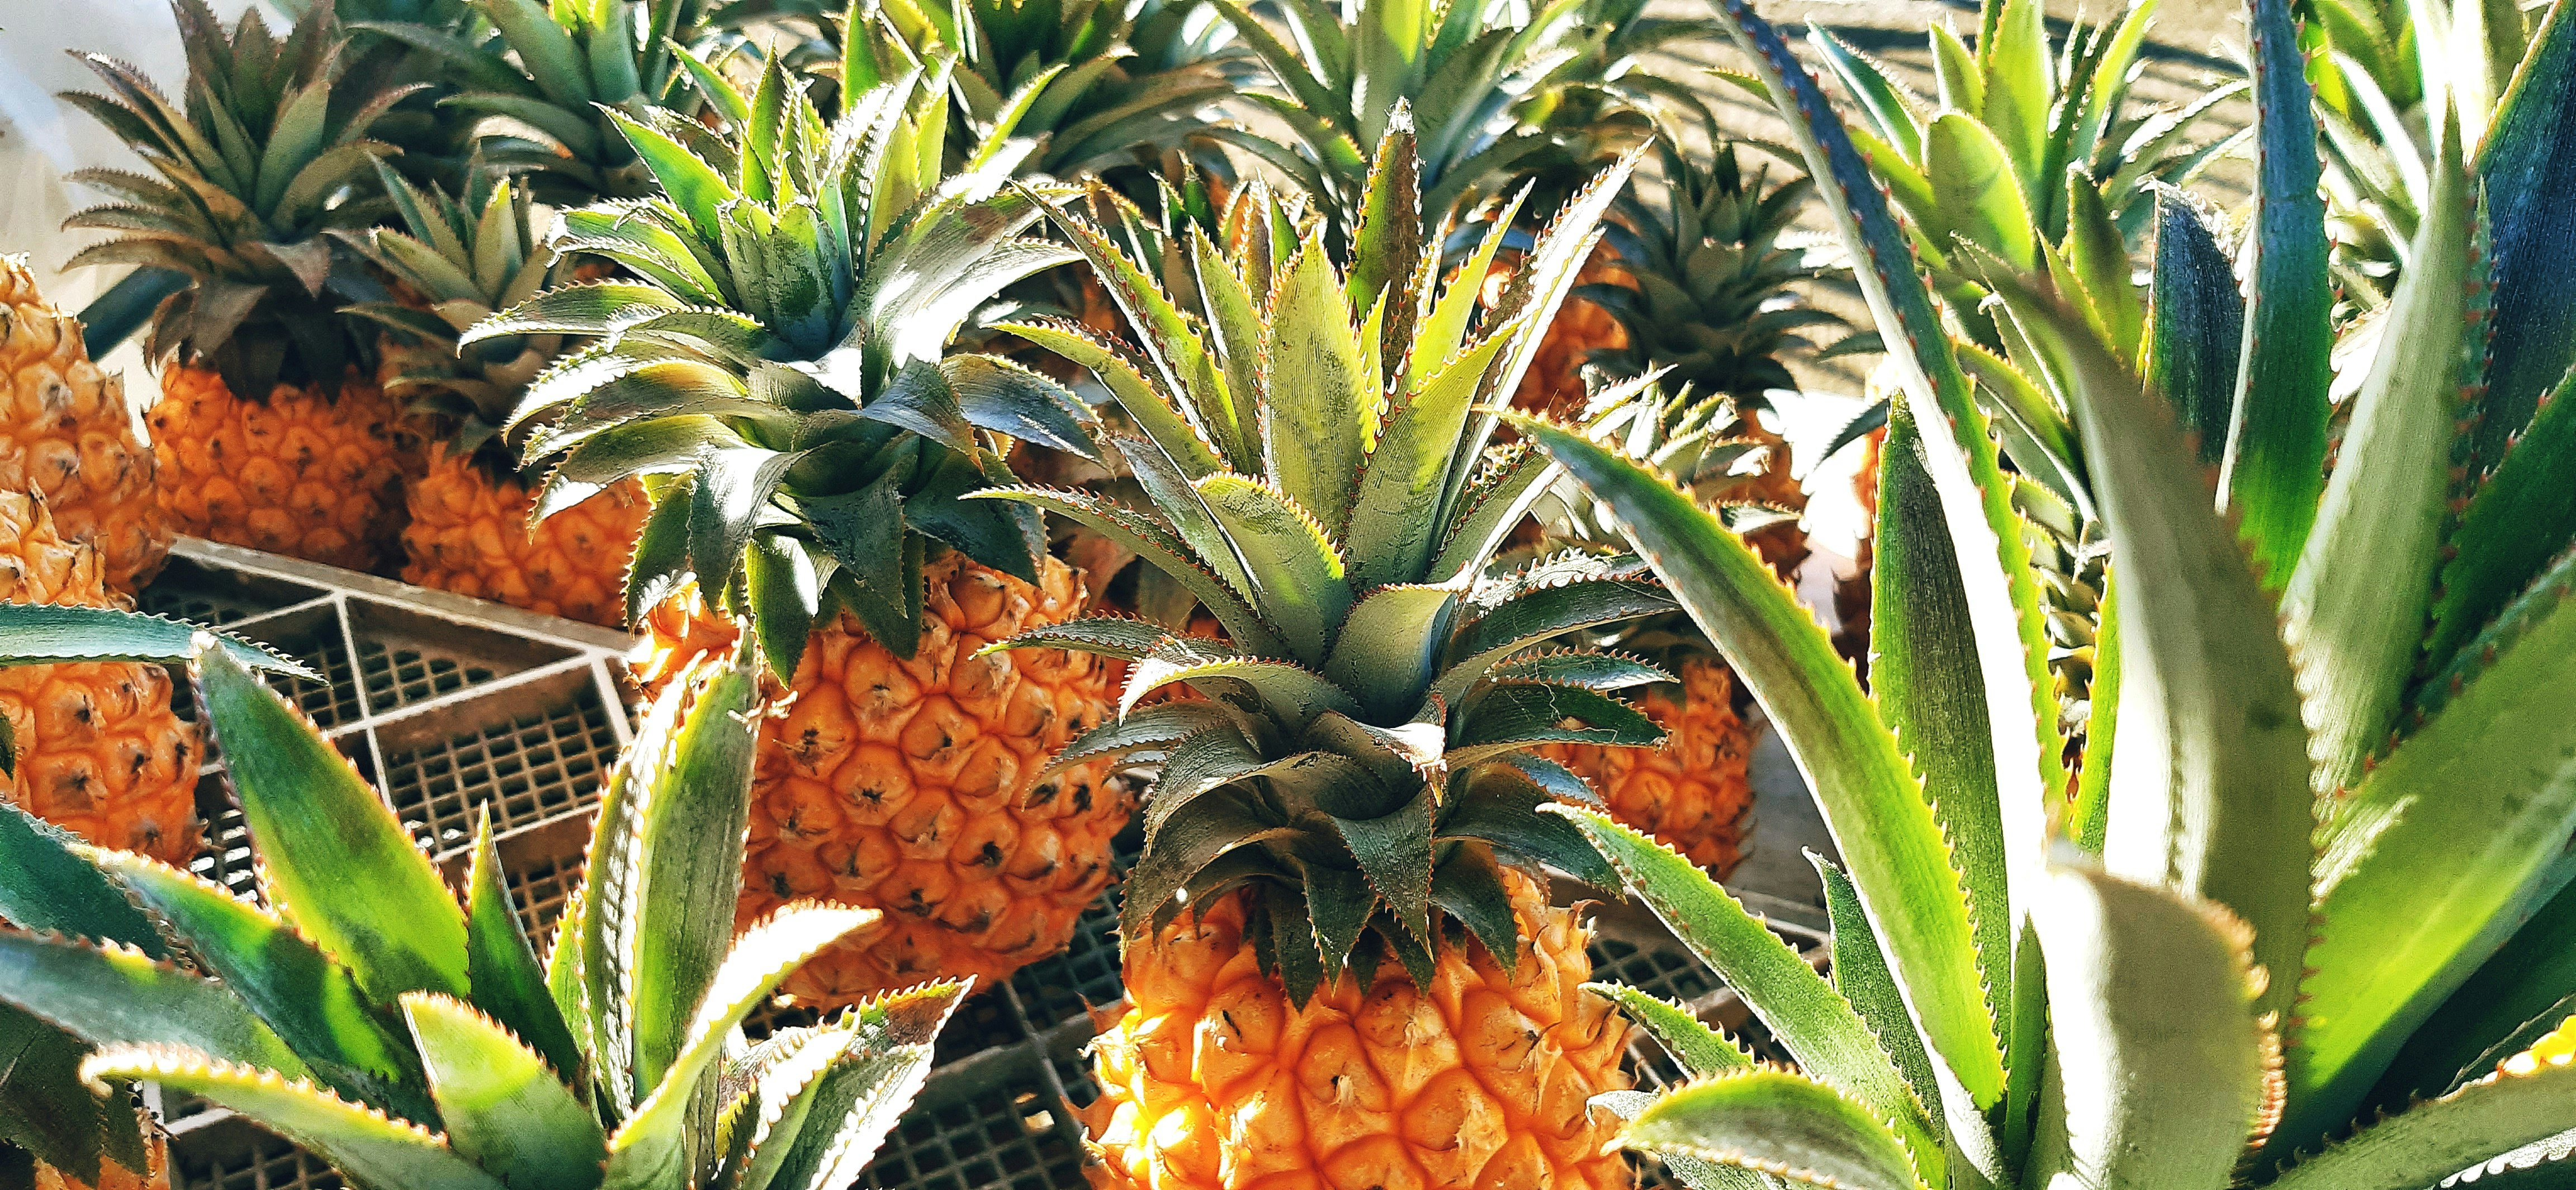 Ripe tropical pineapple.